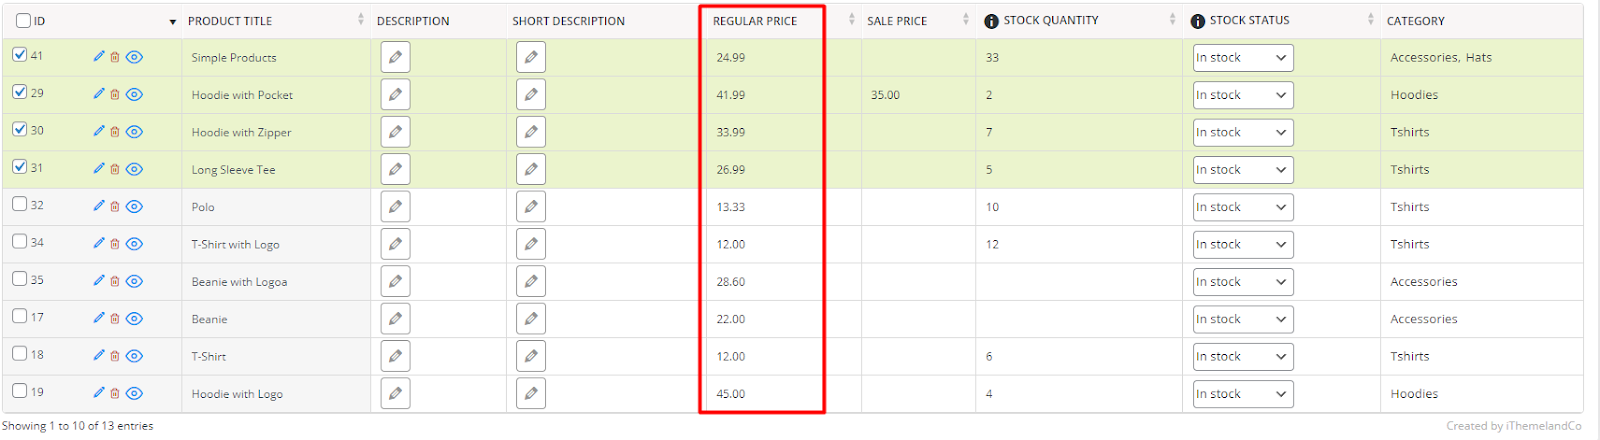 result customization formula in regular price column